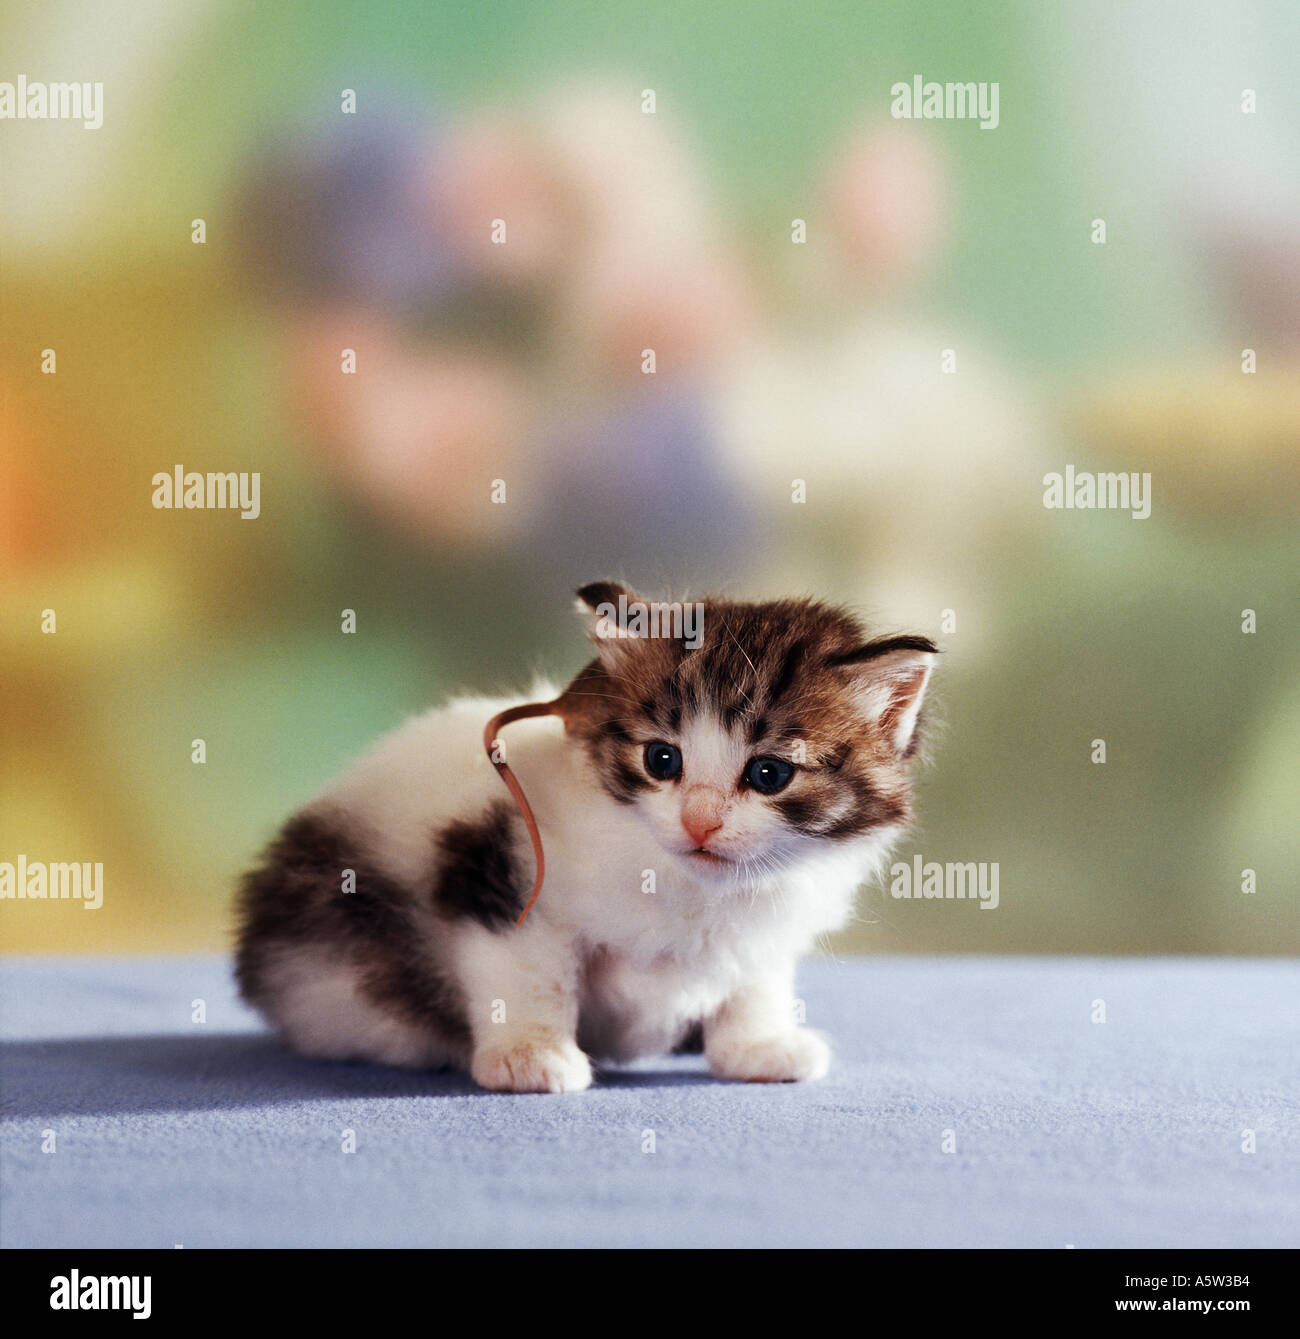 animal friendship : mouse on domestic cat kitten Stock Photo